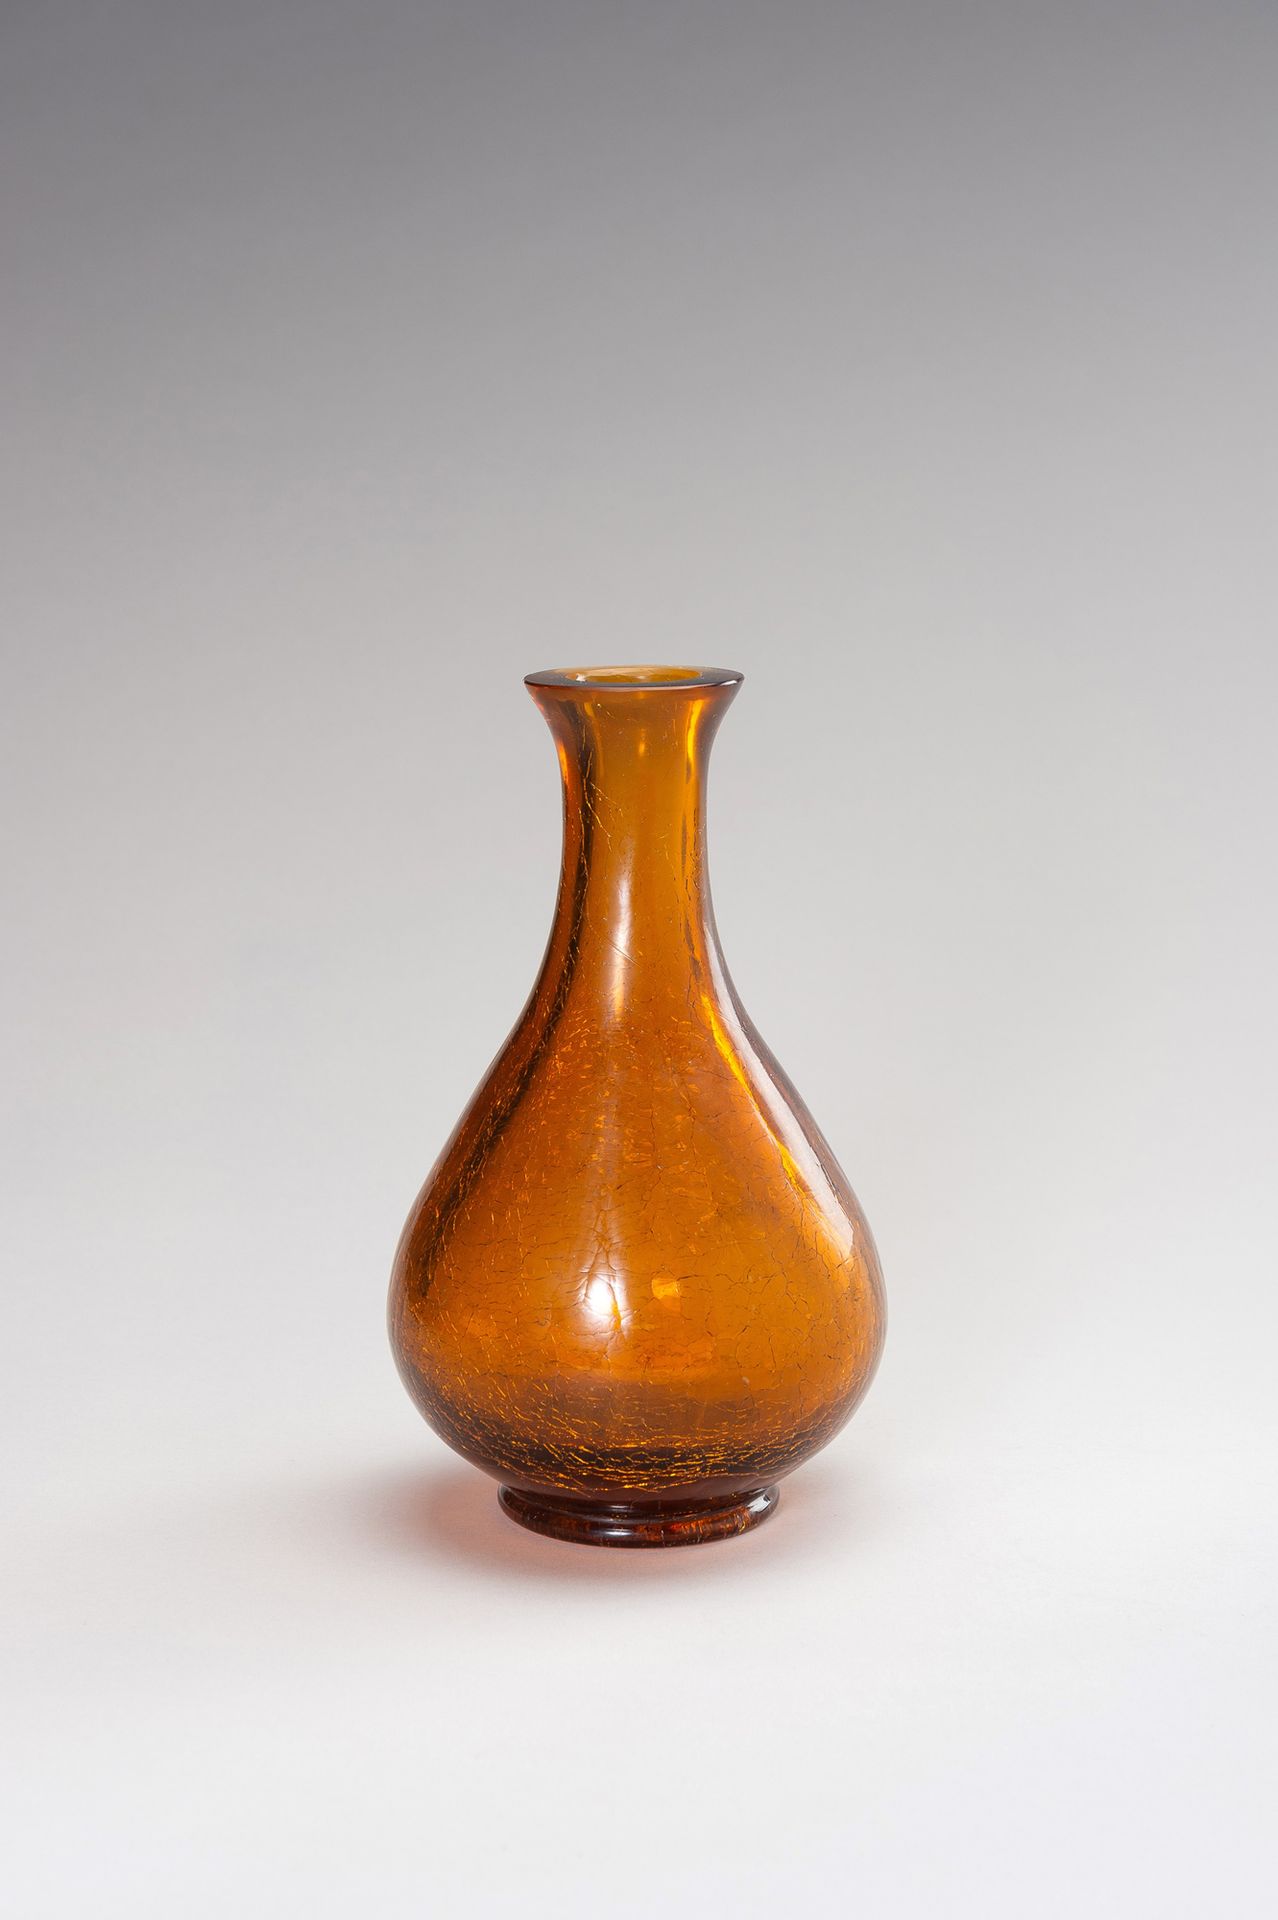 AN AMBER CRACKLE GLASS VASE 一个琥珀色的裂纹玻璃瓶
中国，清末（1644-1912）。透明的琥珀色玻璃花瓶是梨形的，从短底上升到腰部&hellip;